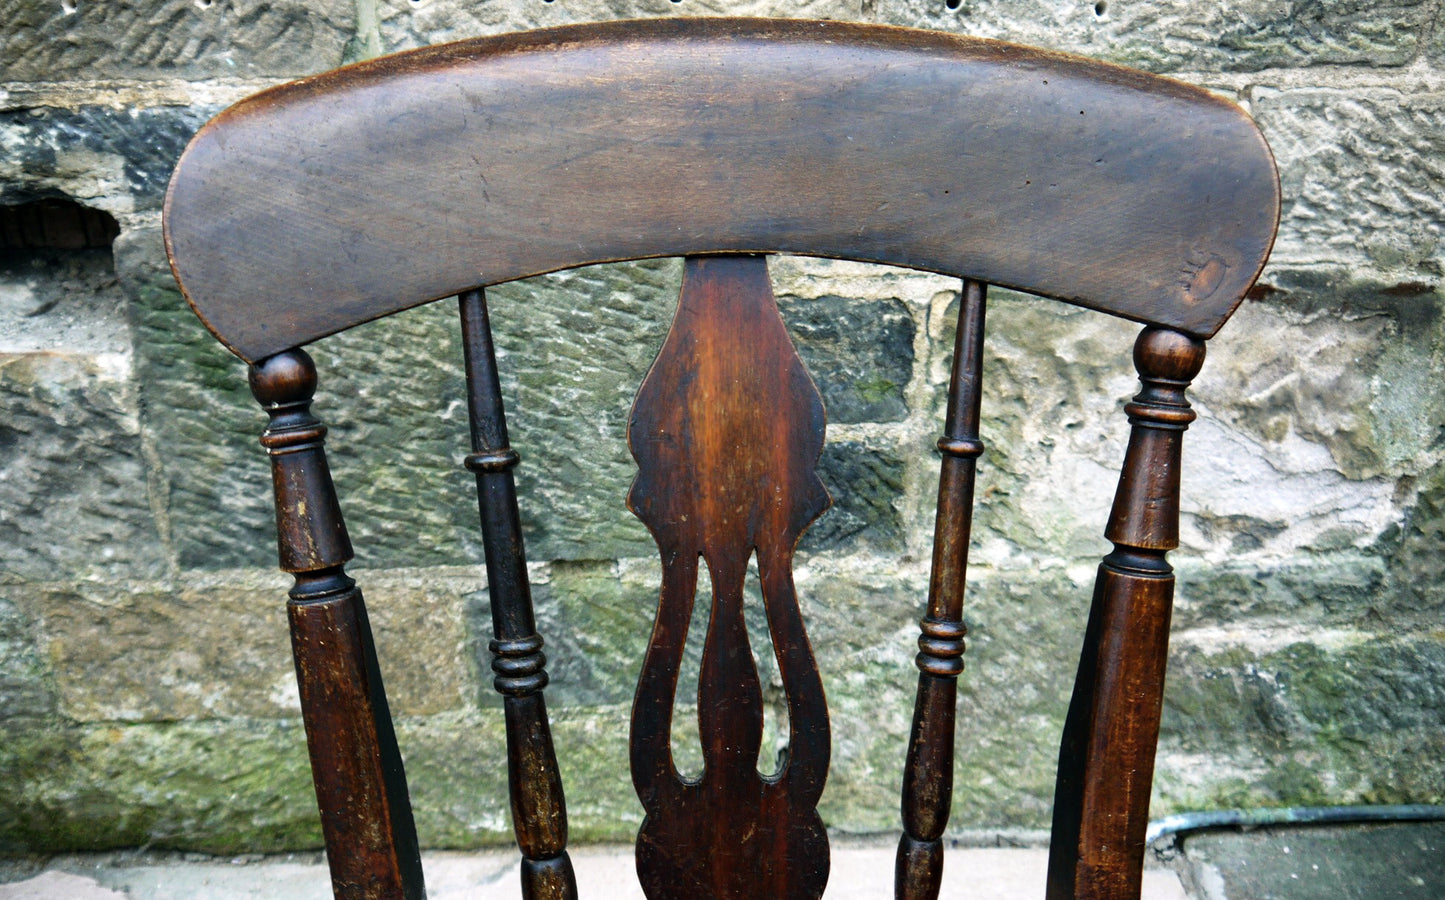 Beautiful antique beech Windsor dining chair